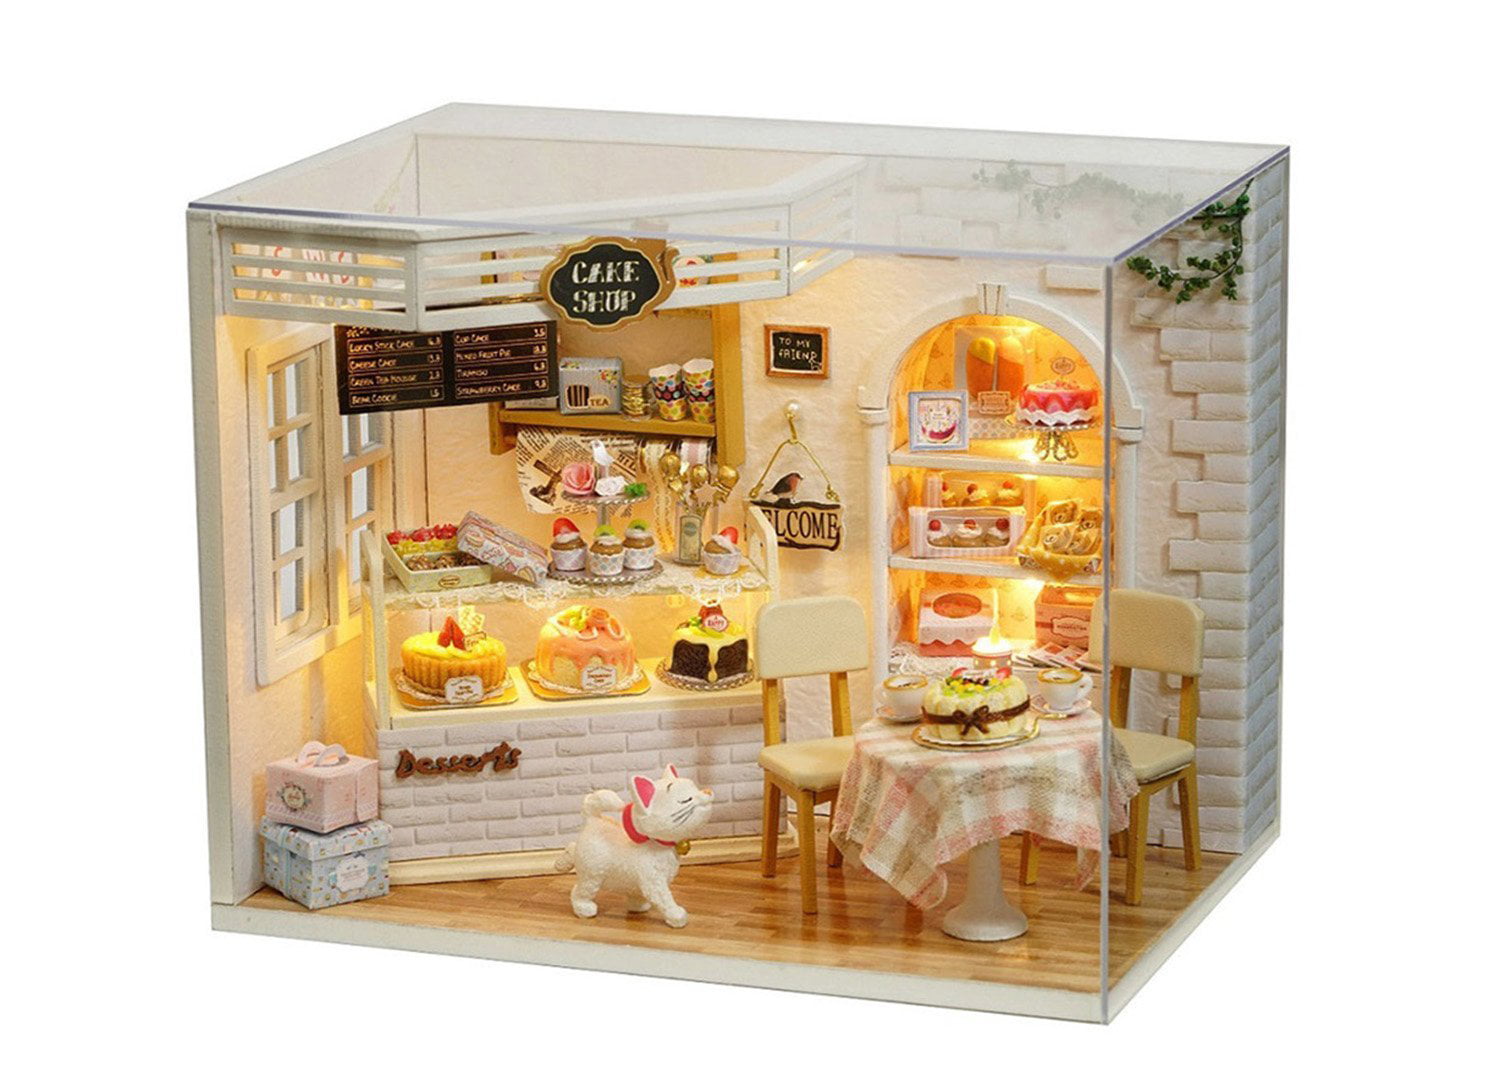 CuteBee Dollhouse Miniature with Furniture DIY Wooden DollHouse Kit Plus Dust 